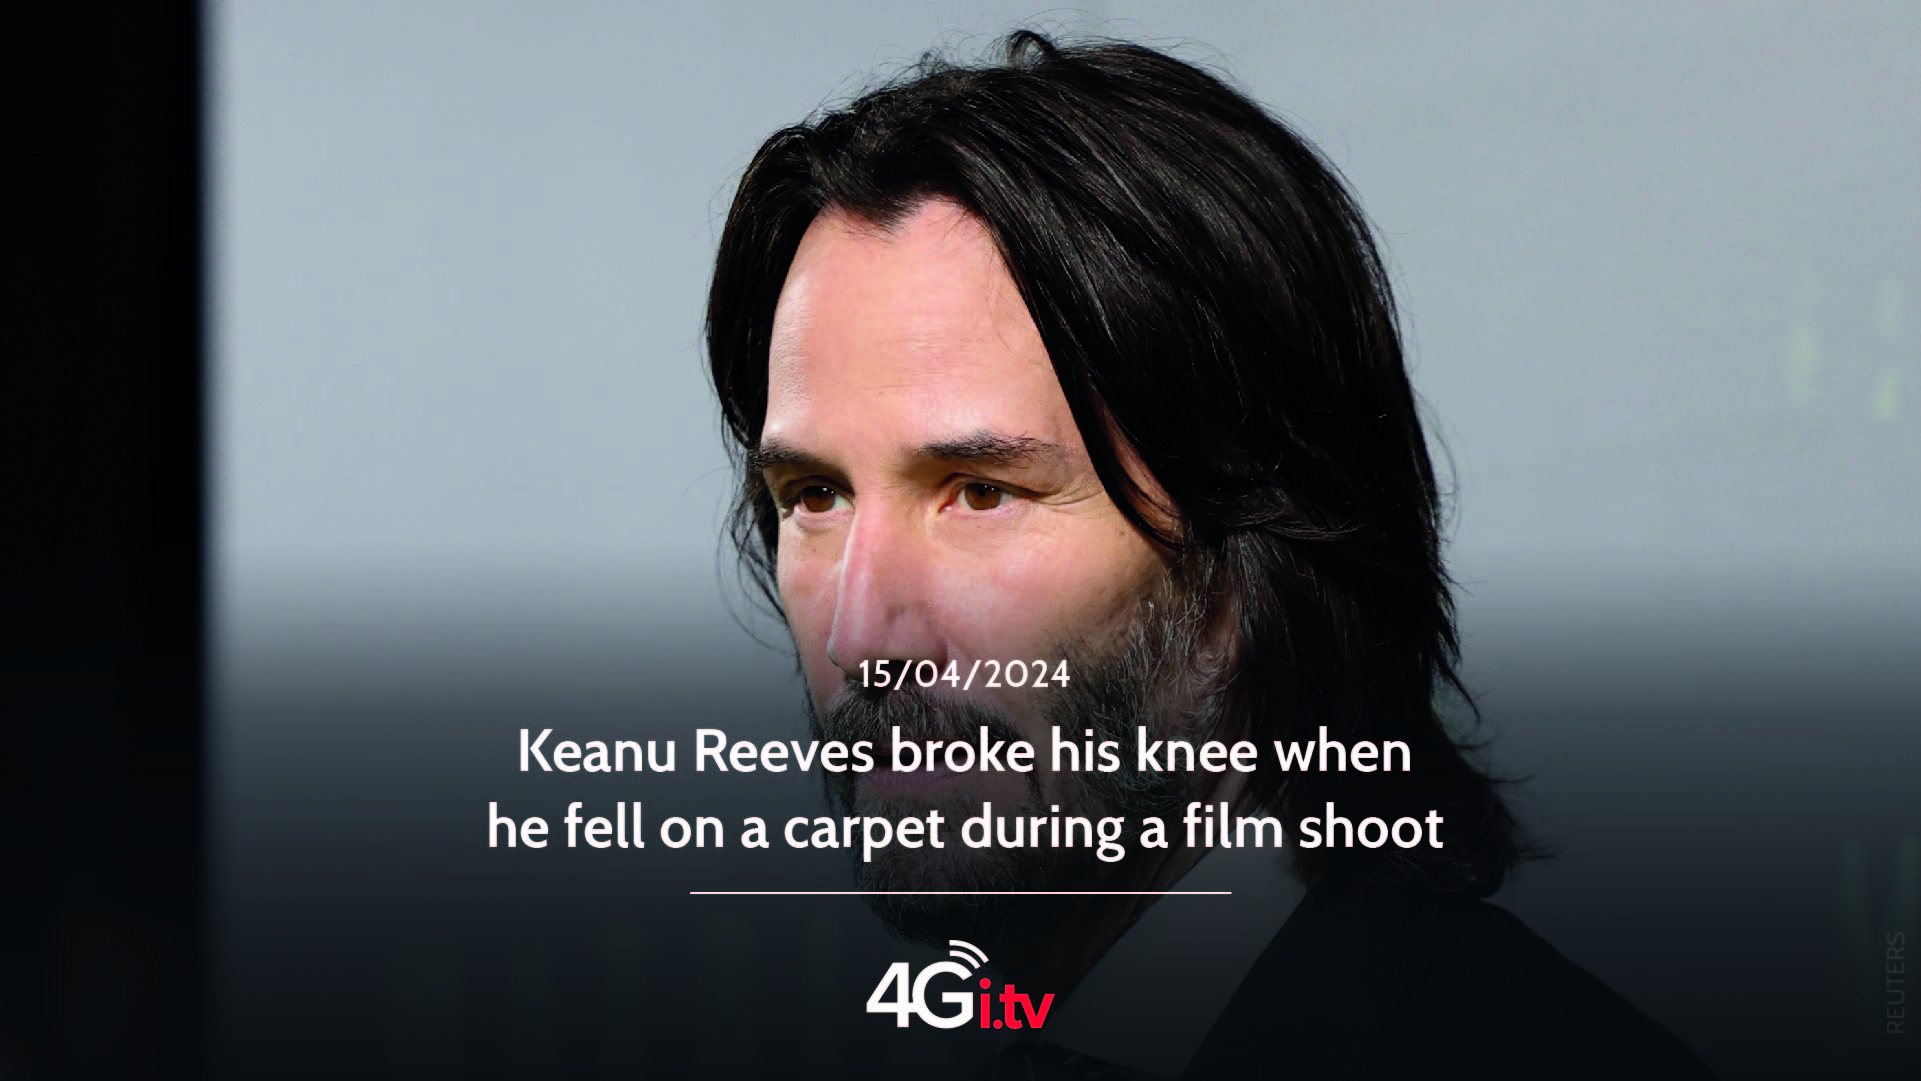 Lesen Sie mehr über den Artikel Keanu Reeves broke his knee when he fell on a carpet during a film shoot